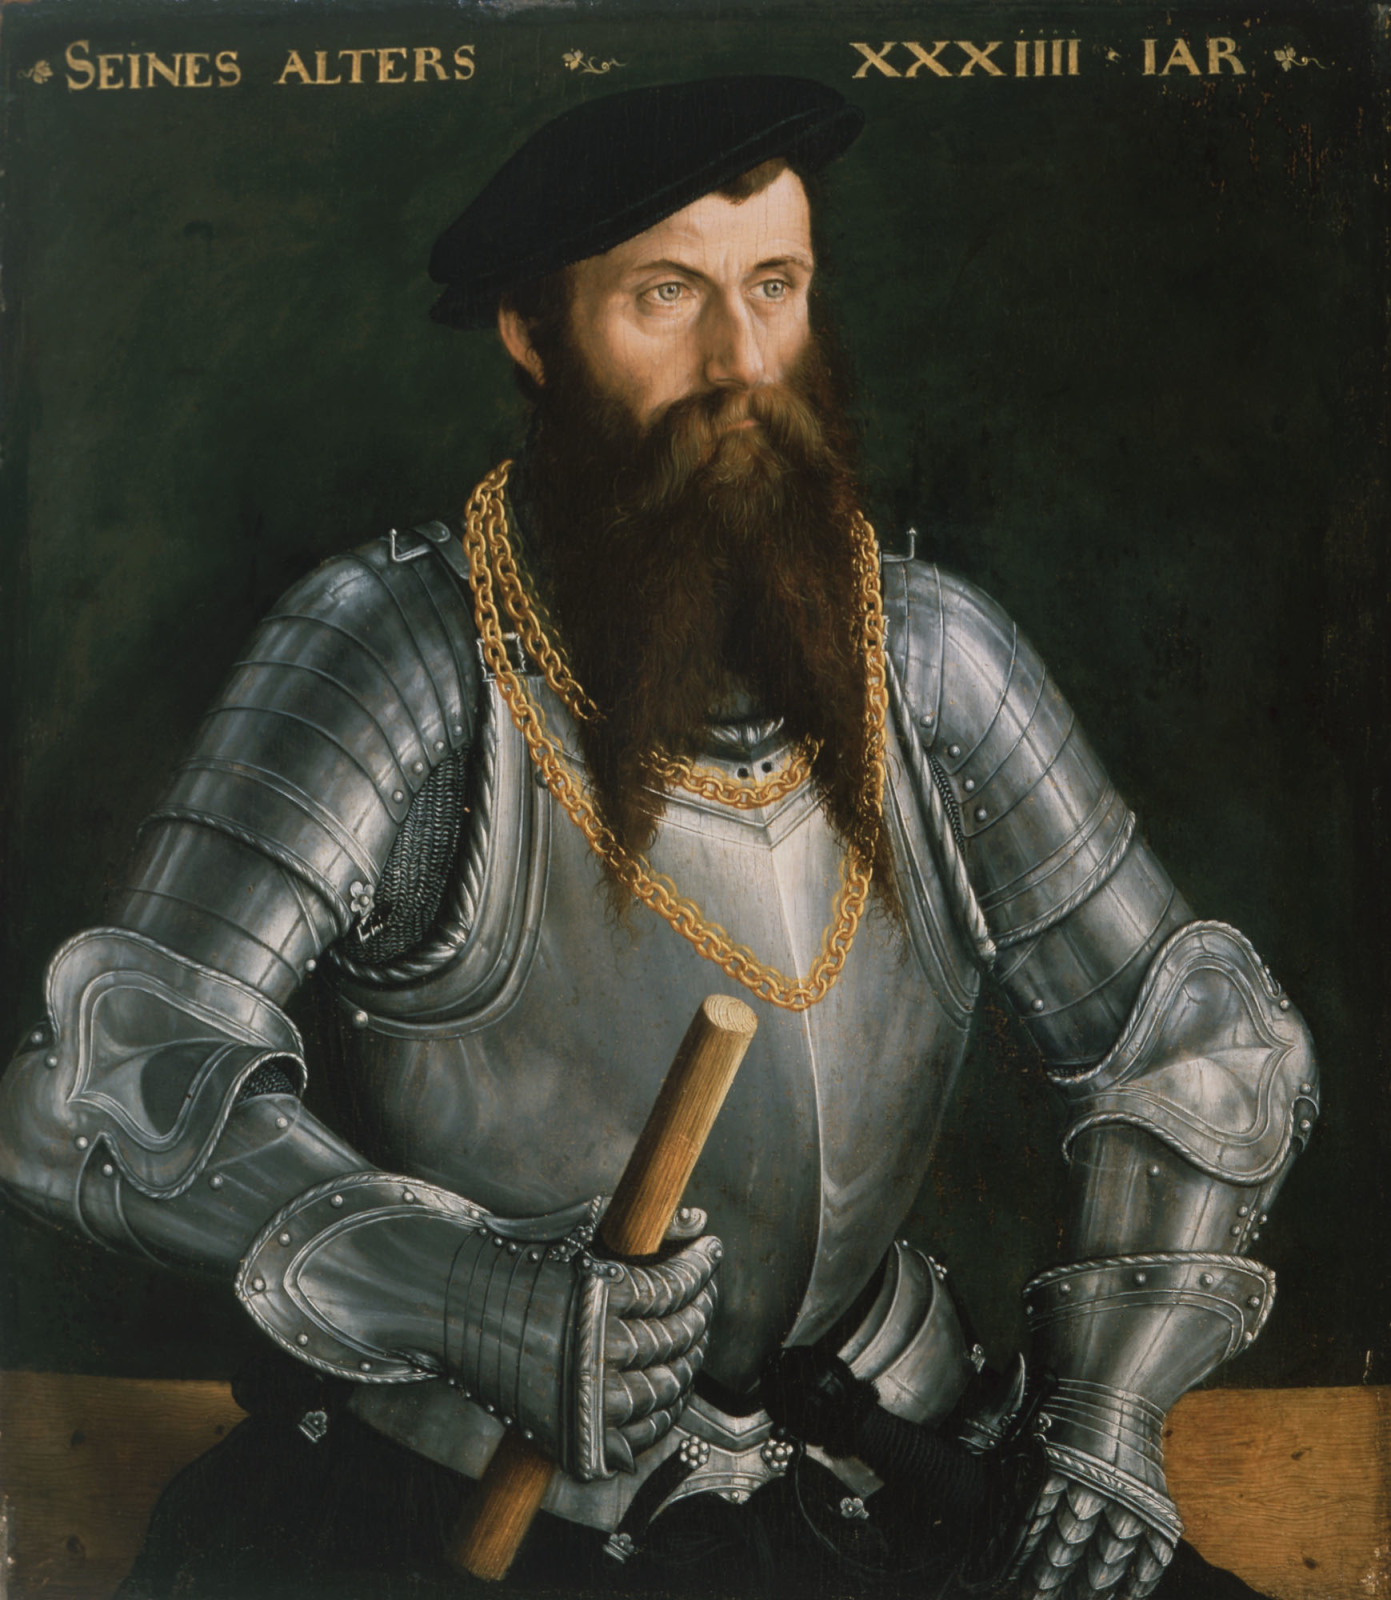 Portrait of a Man in Armor